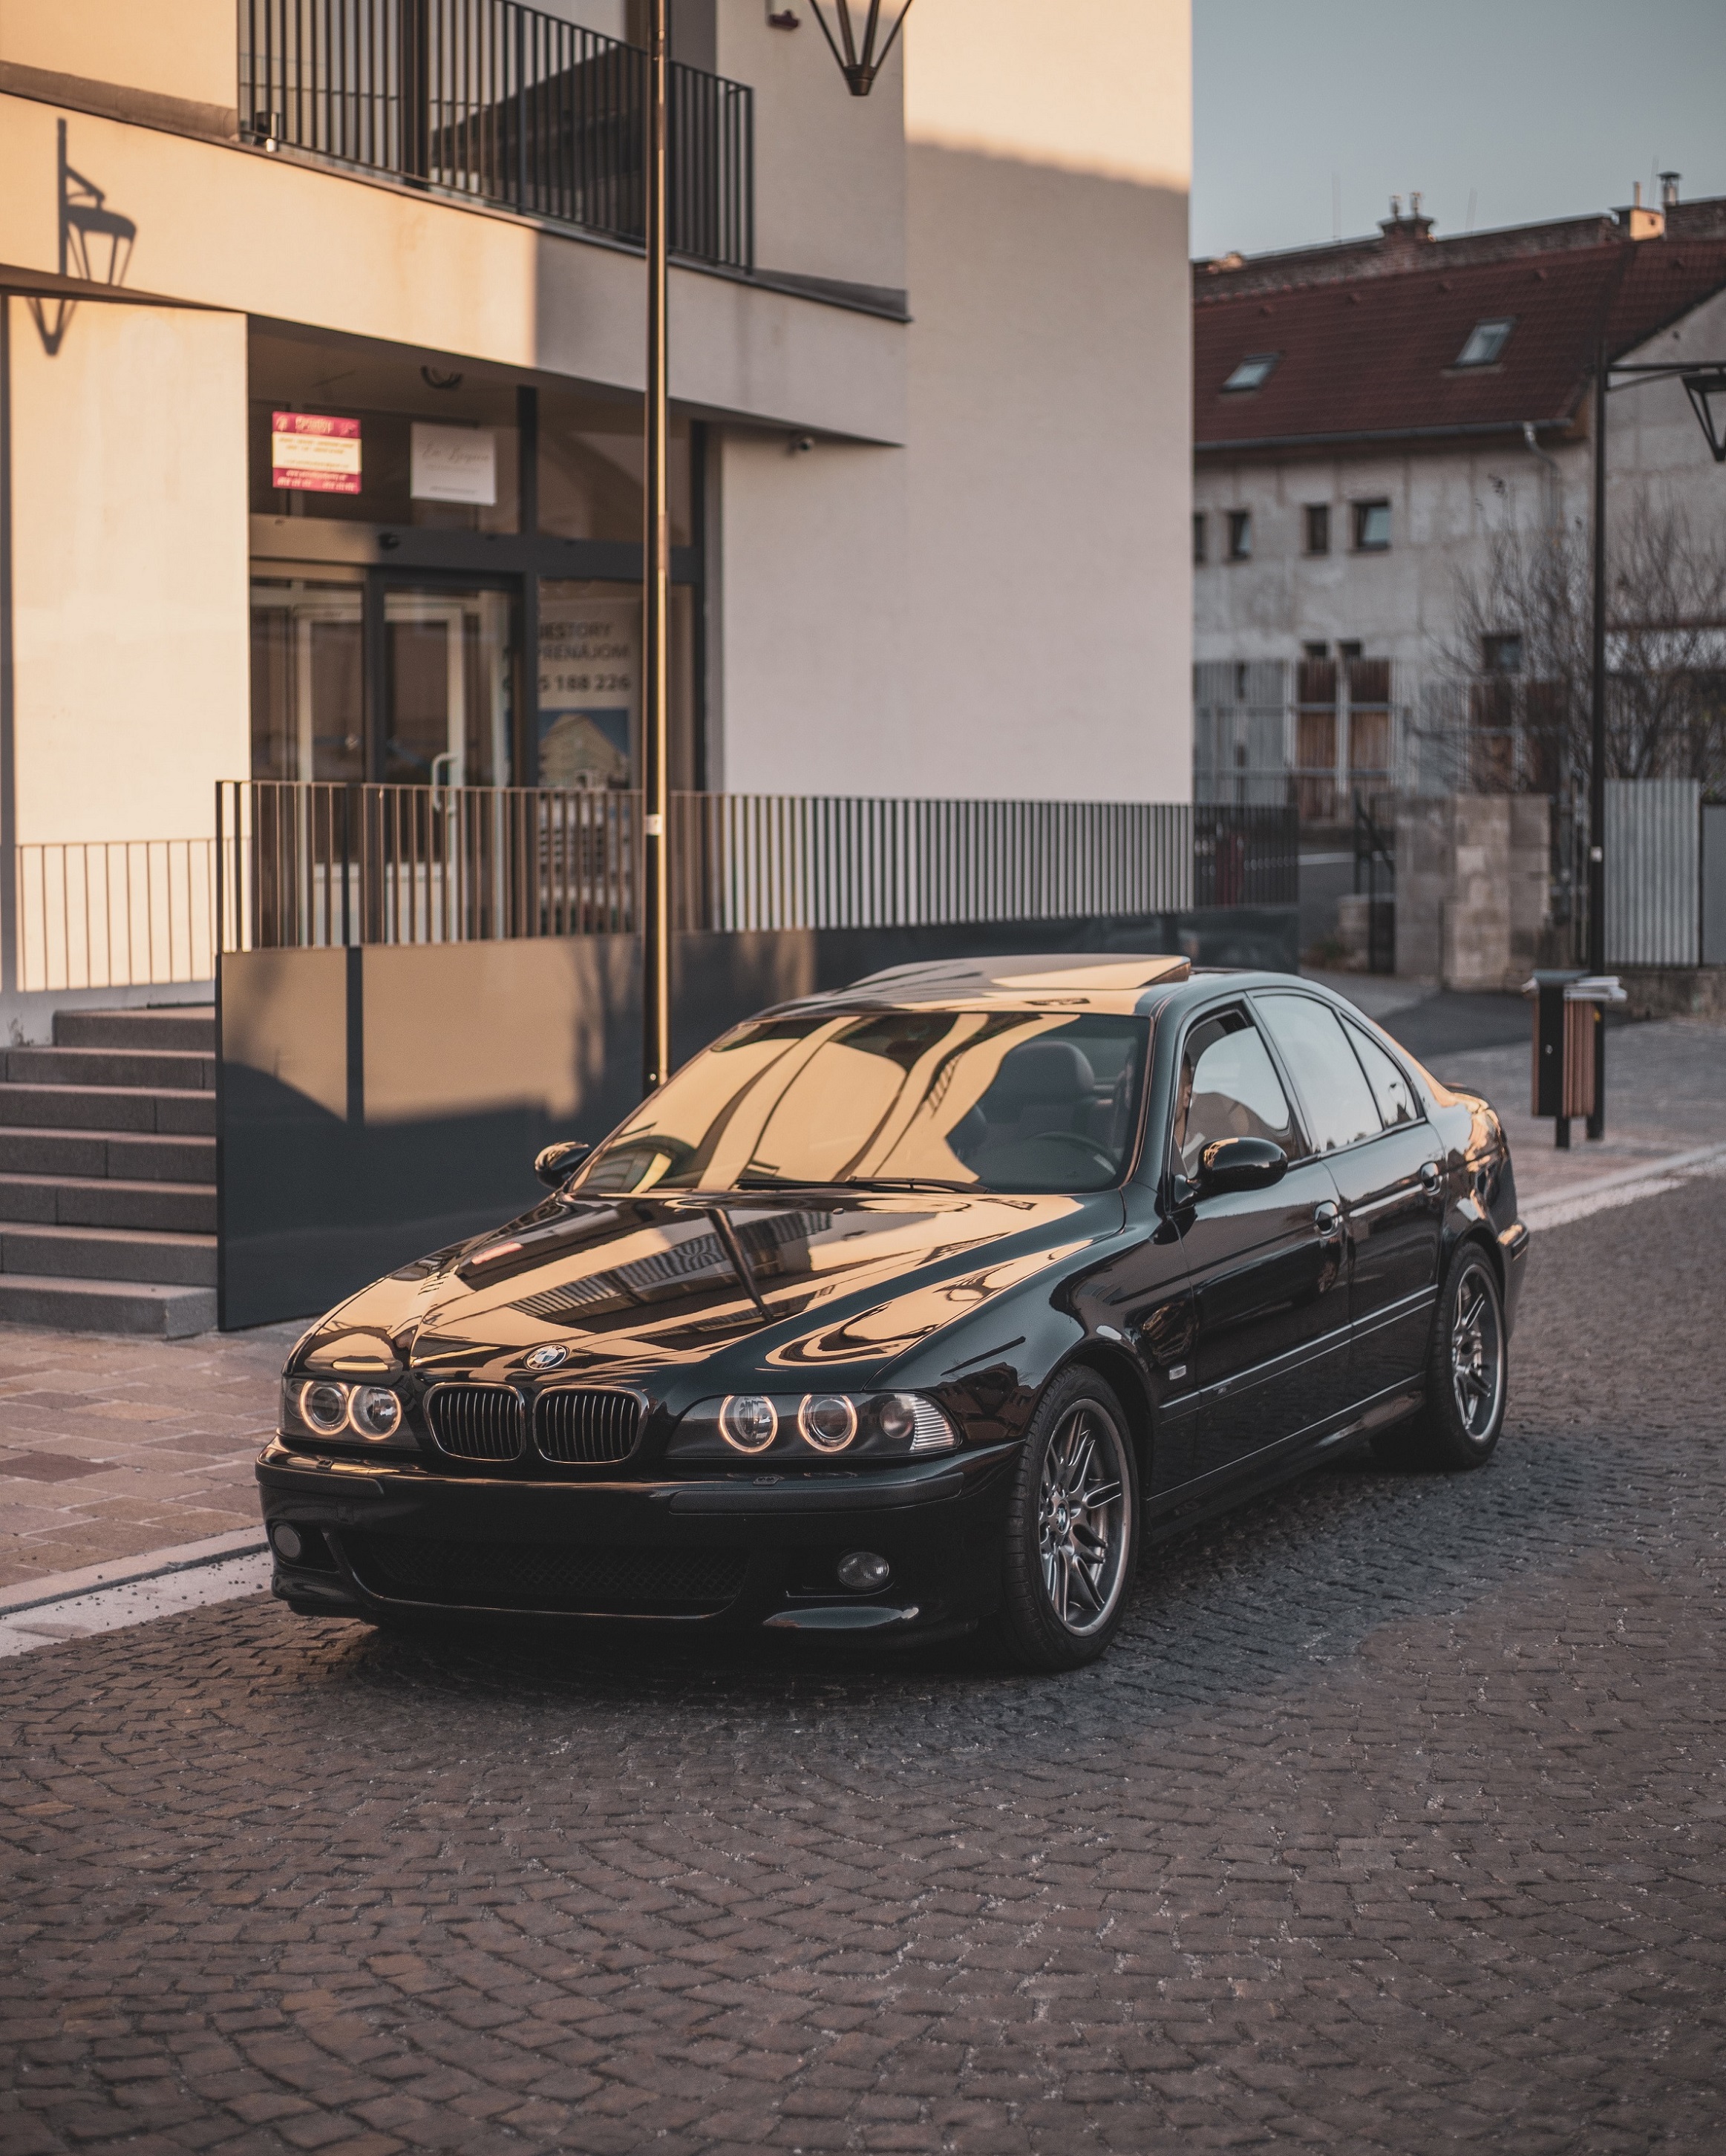 A black post-facelift BMW E39 M5 sedan parked on a European city street